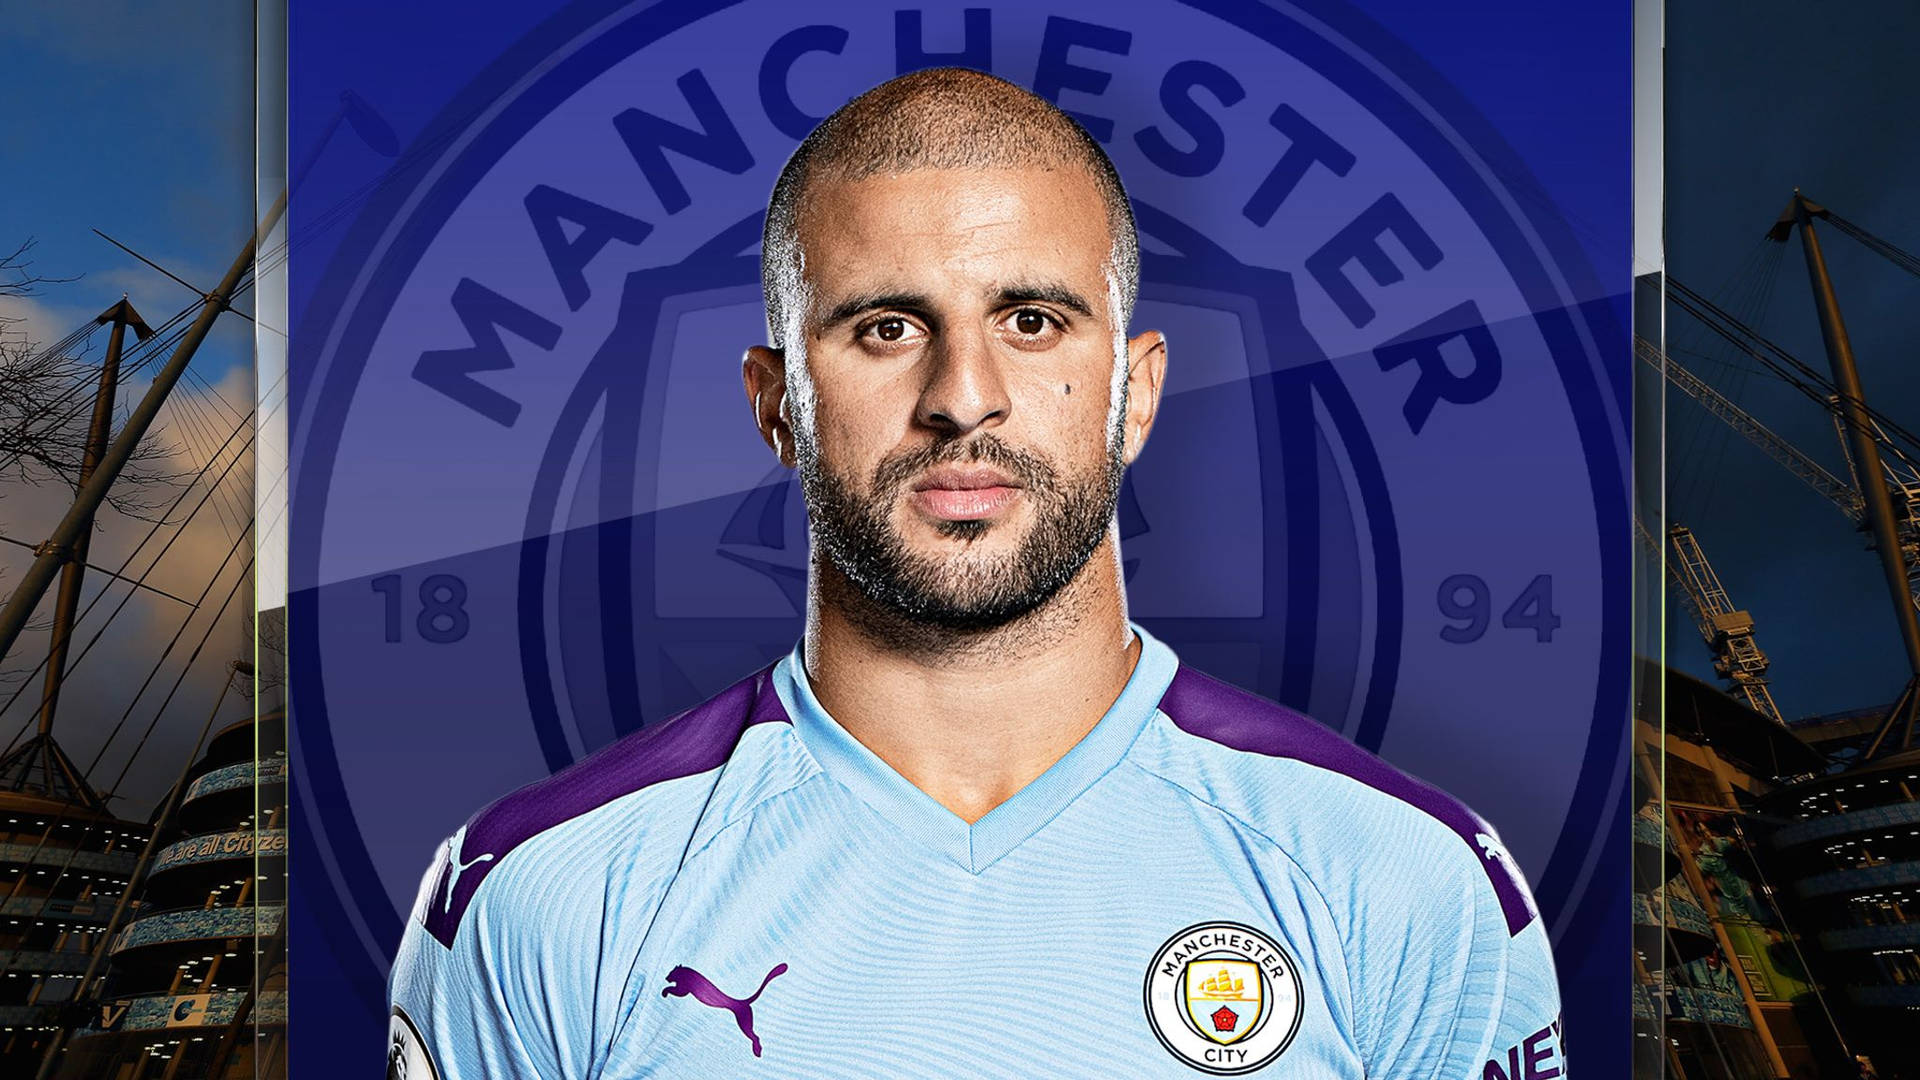 Manchester City Profile